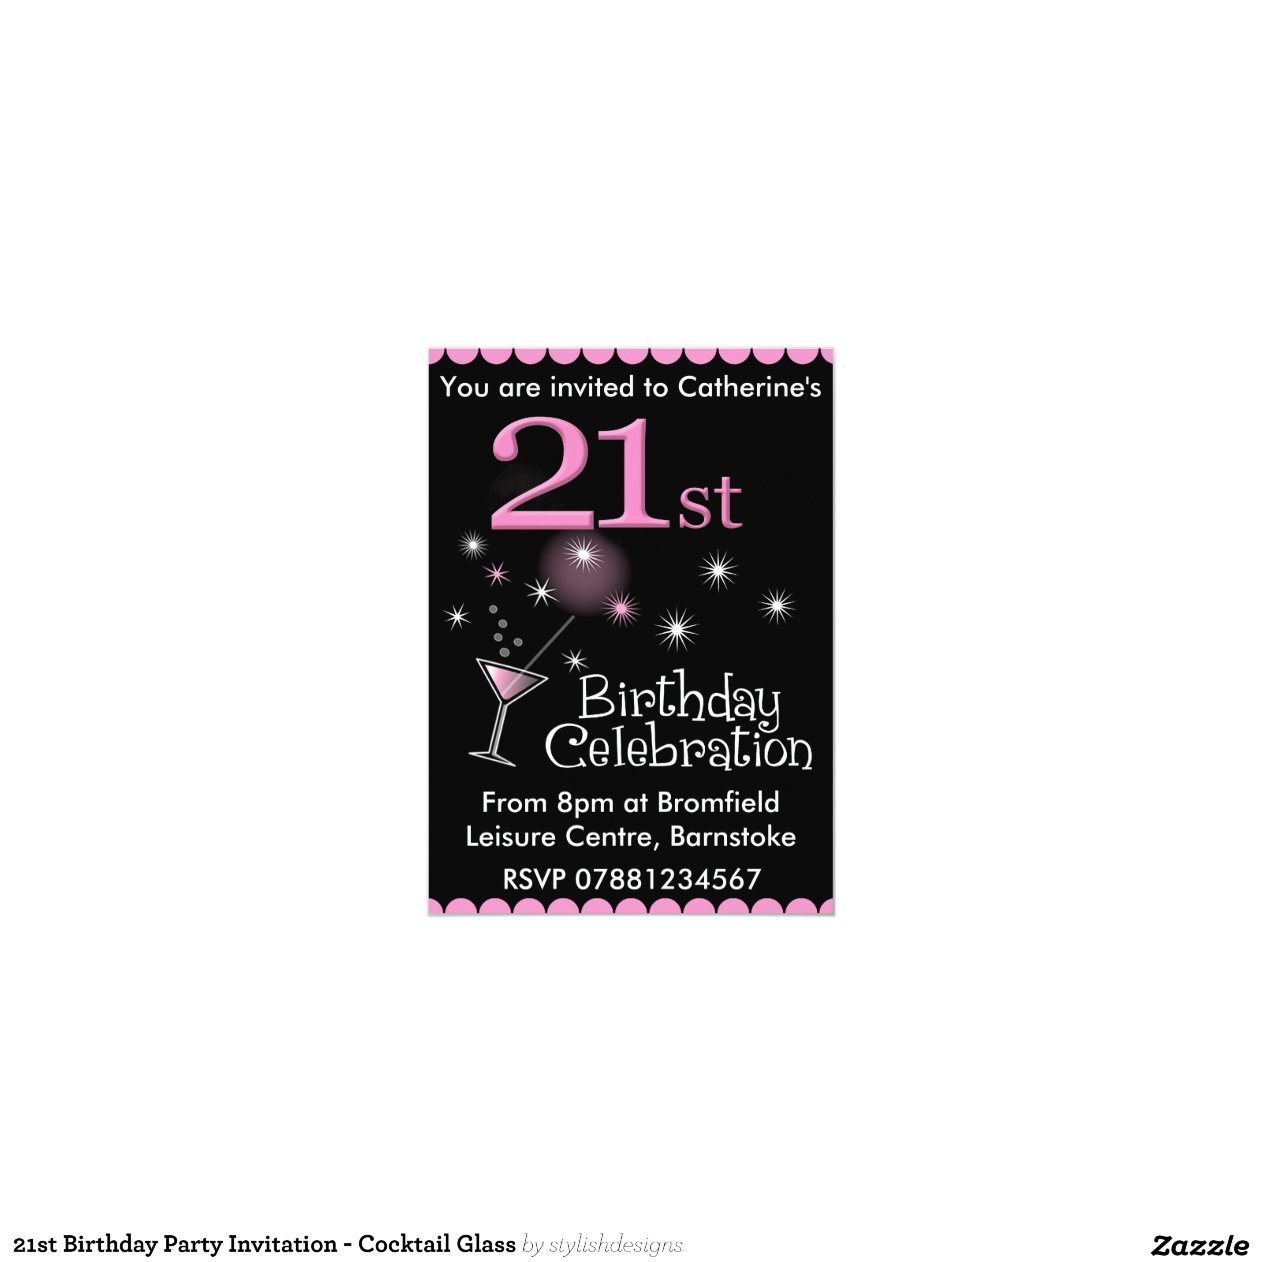 21st Birthday Party Invitation Cocktail Glass 5 X 7 Invitation Card Zazzle 4302